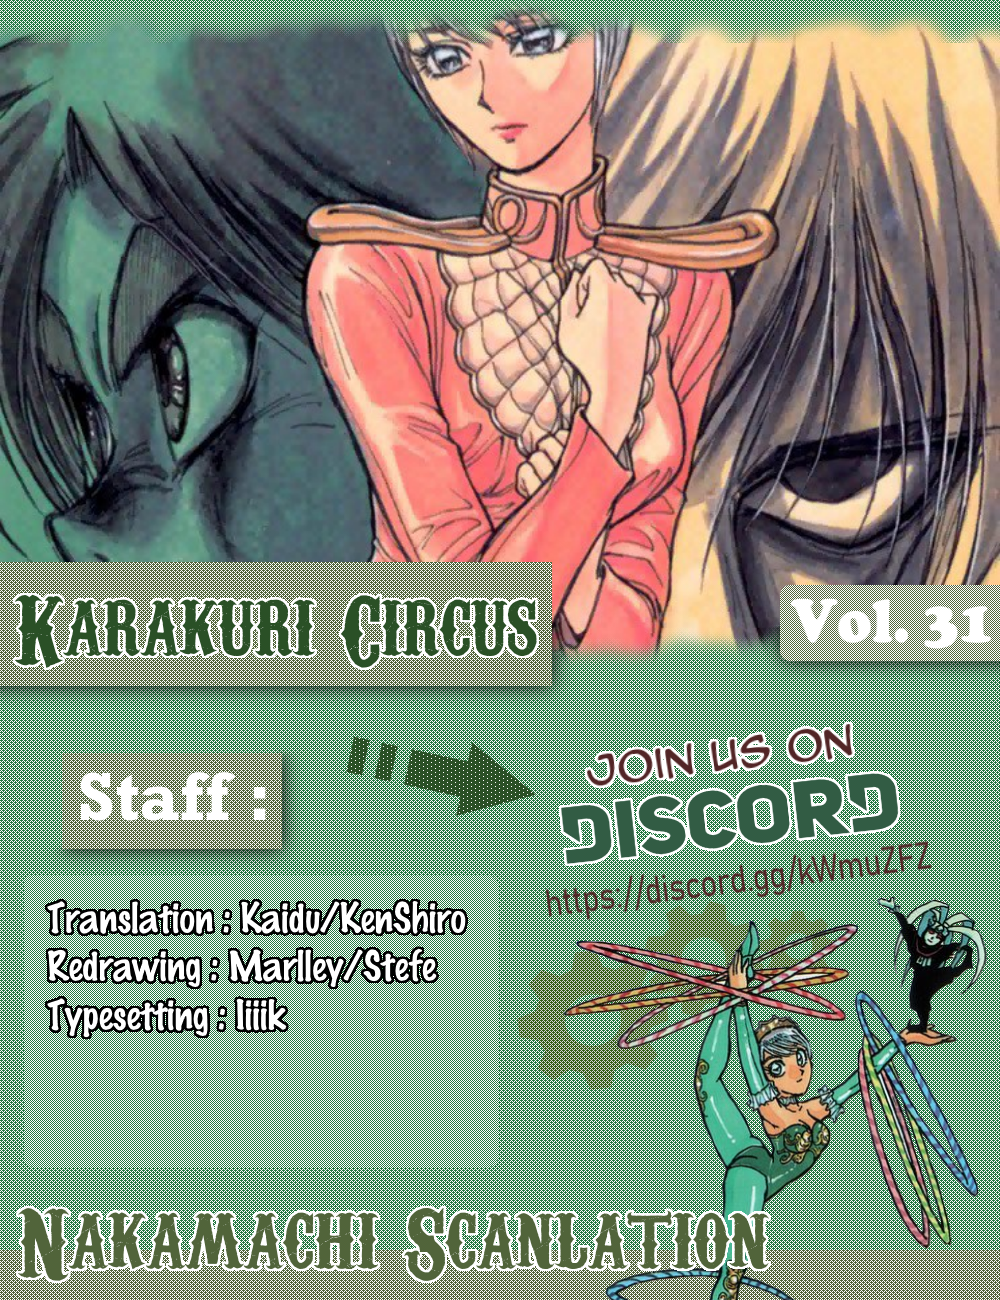 Karakuri Circus Chapter 296: Main Part - Welcome To The Kuroga Village - Act 14: The Beginning Of Two Battles - Picture 2